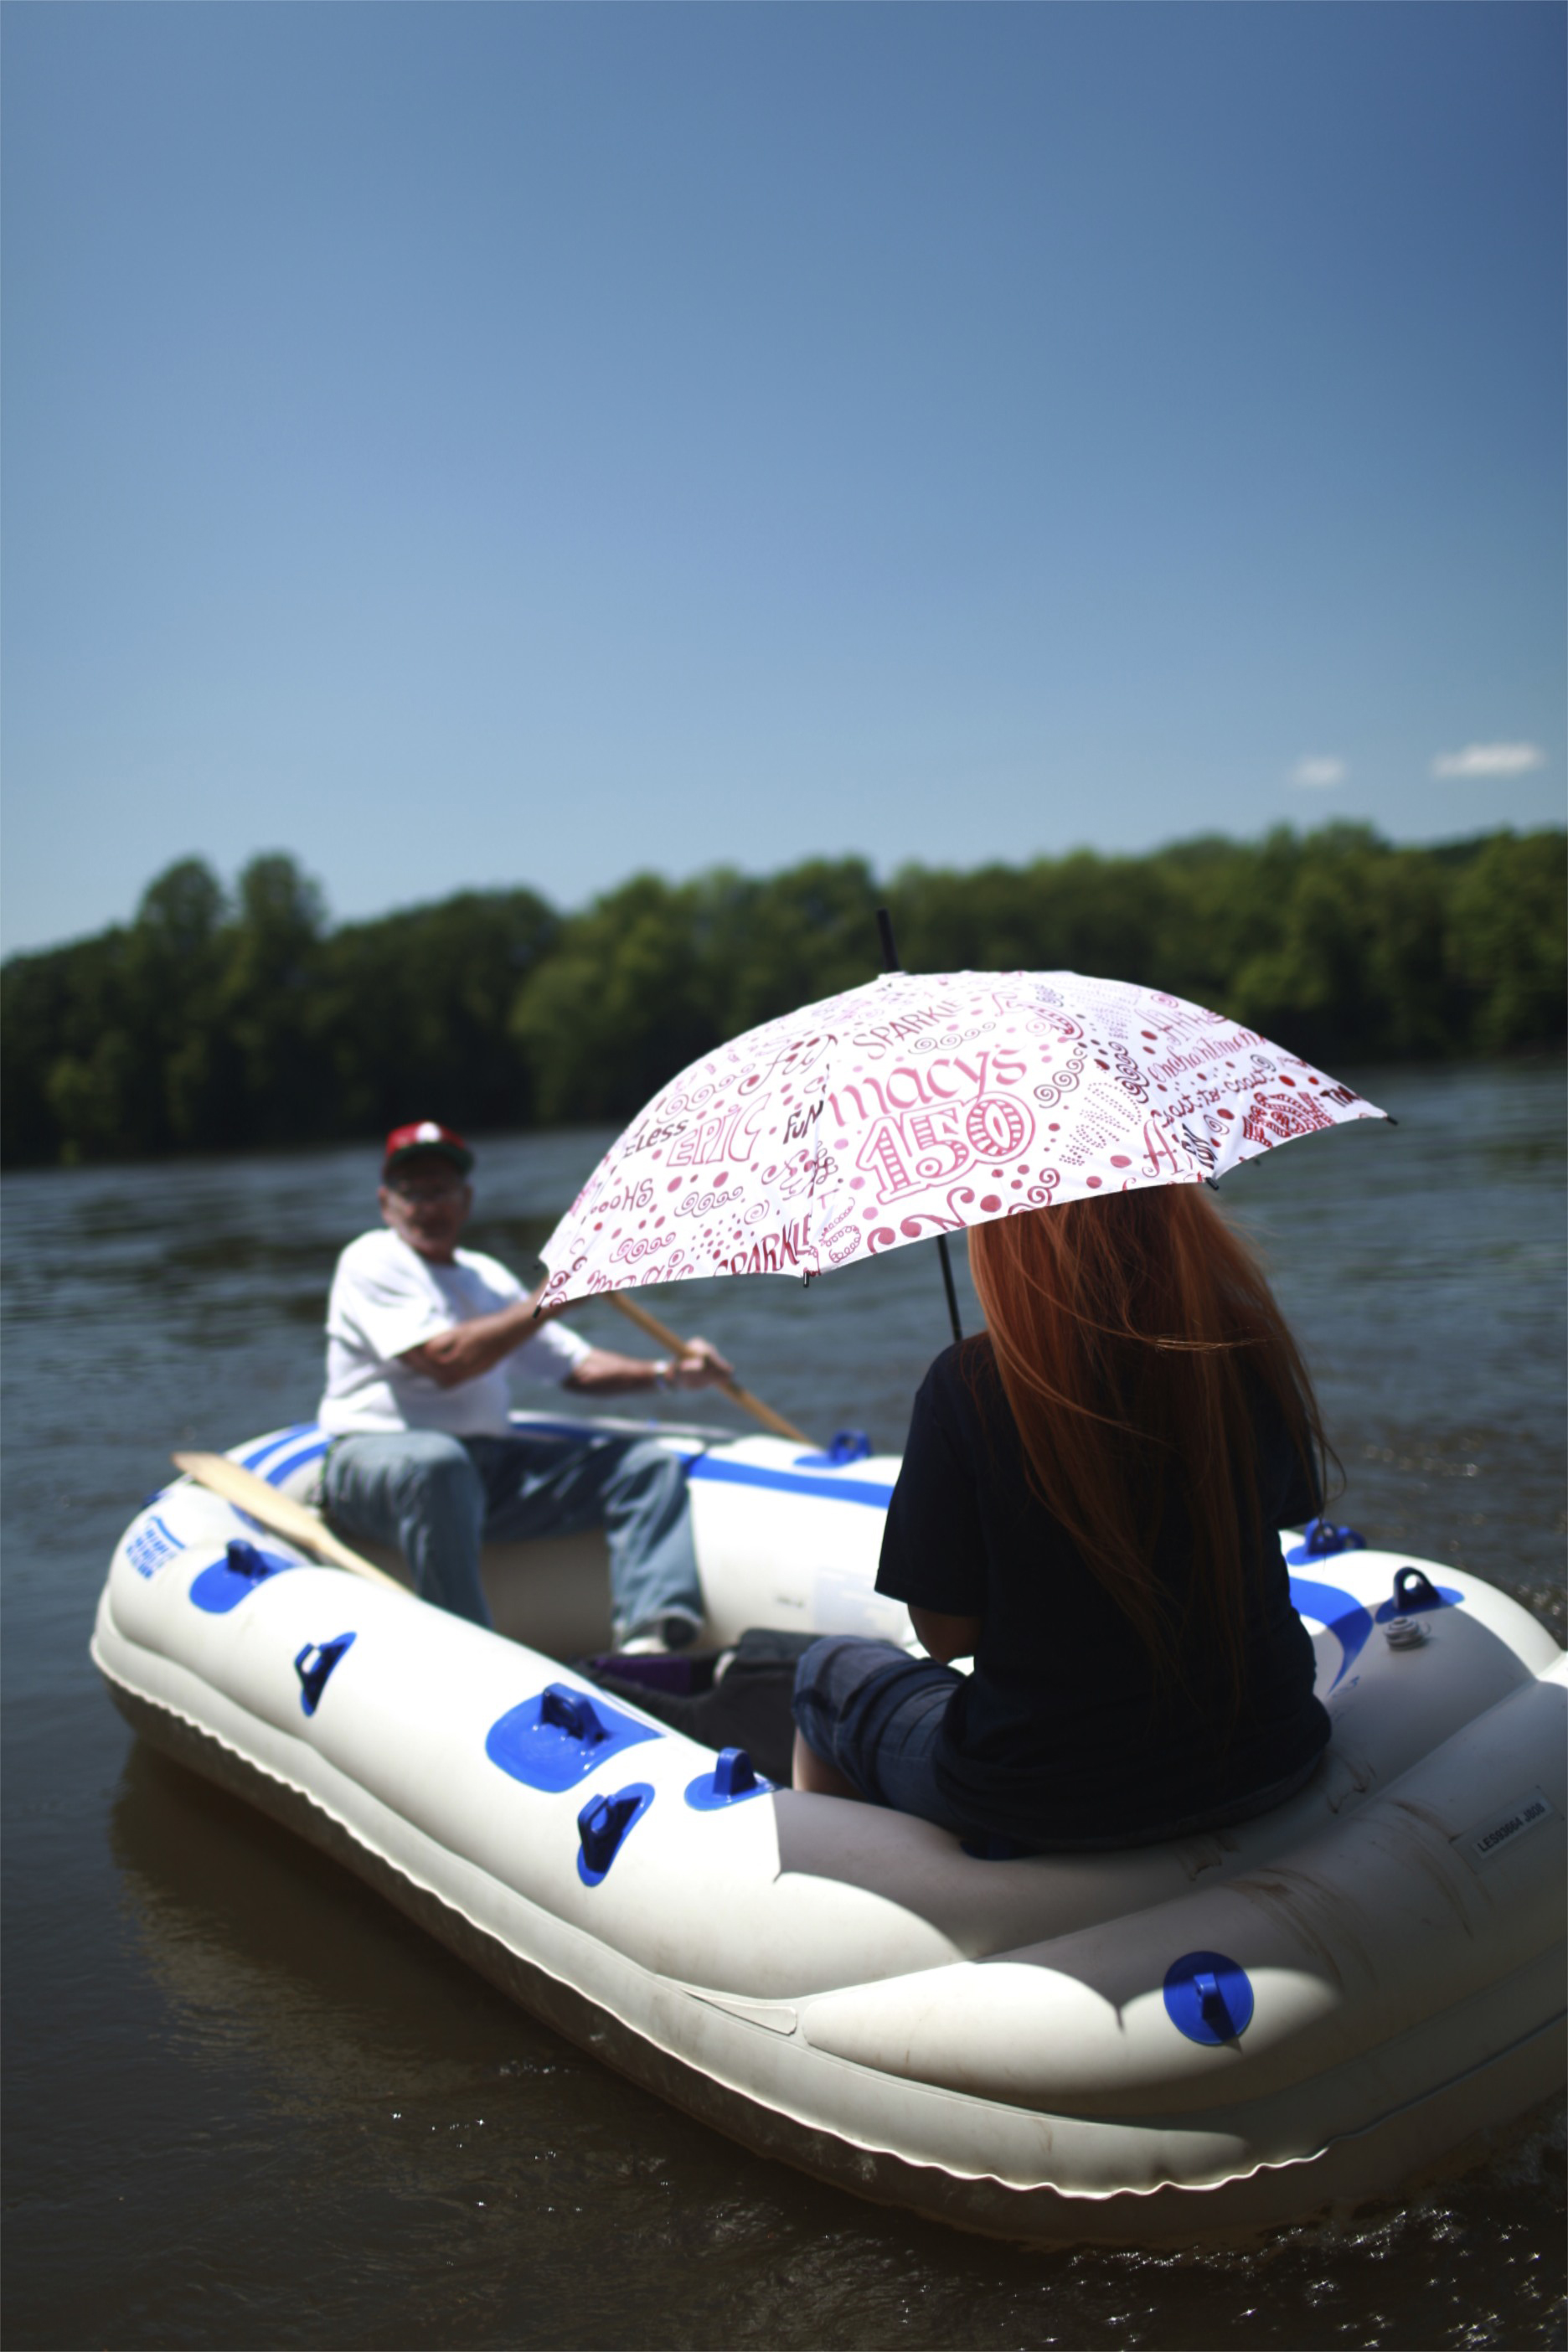 Rafts offer scenic views